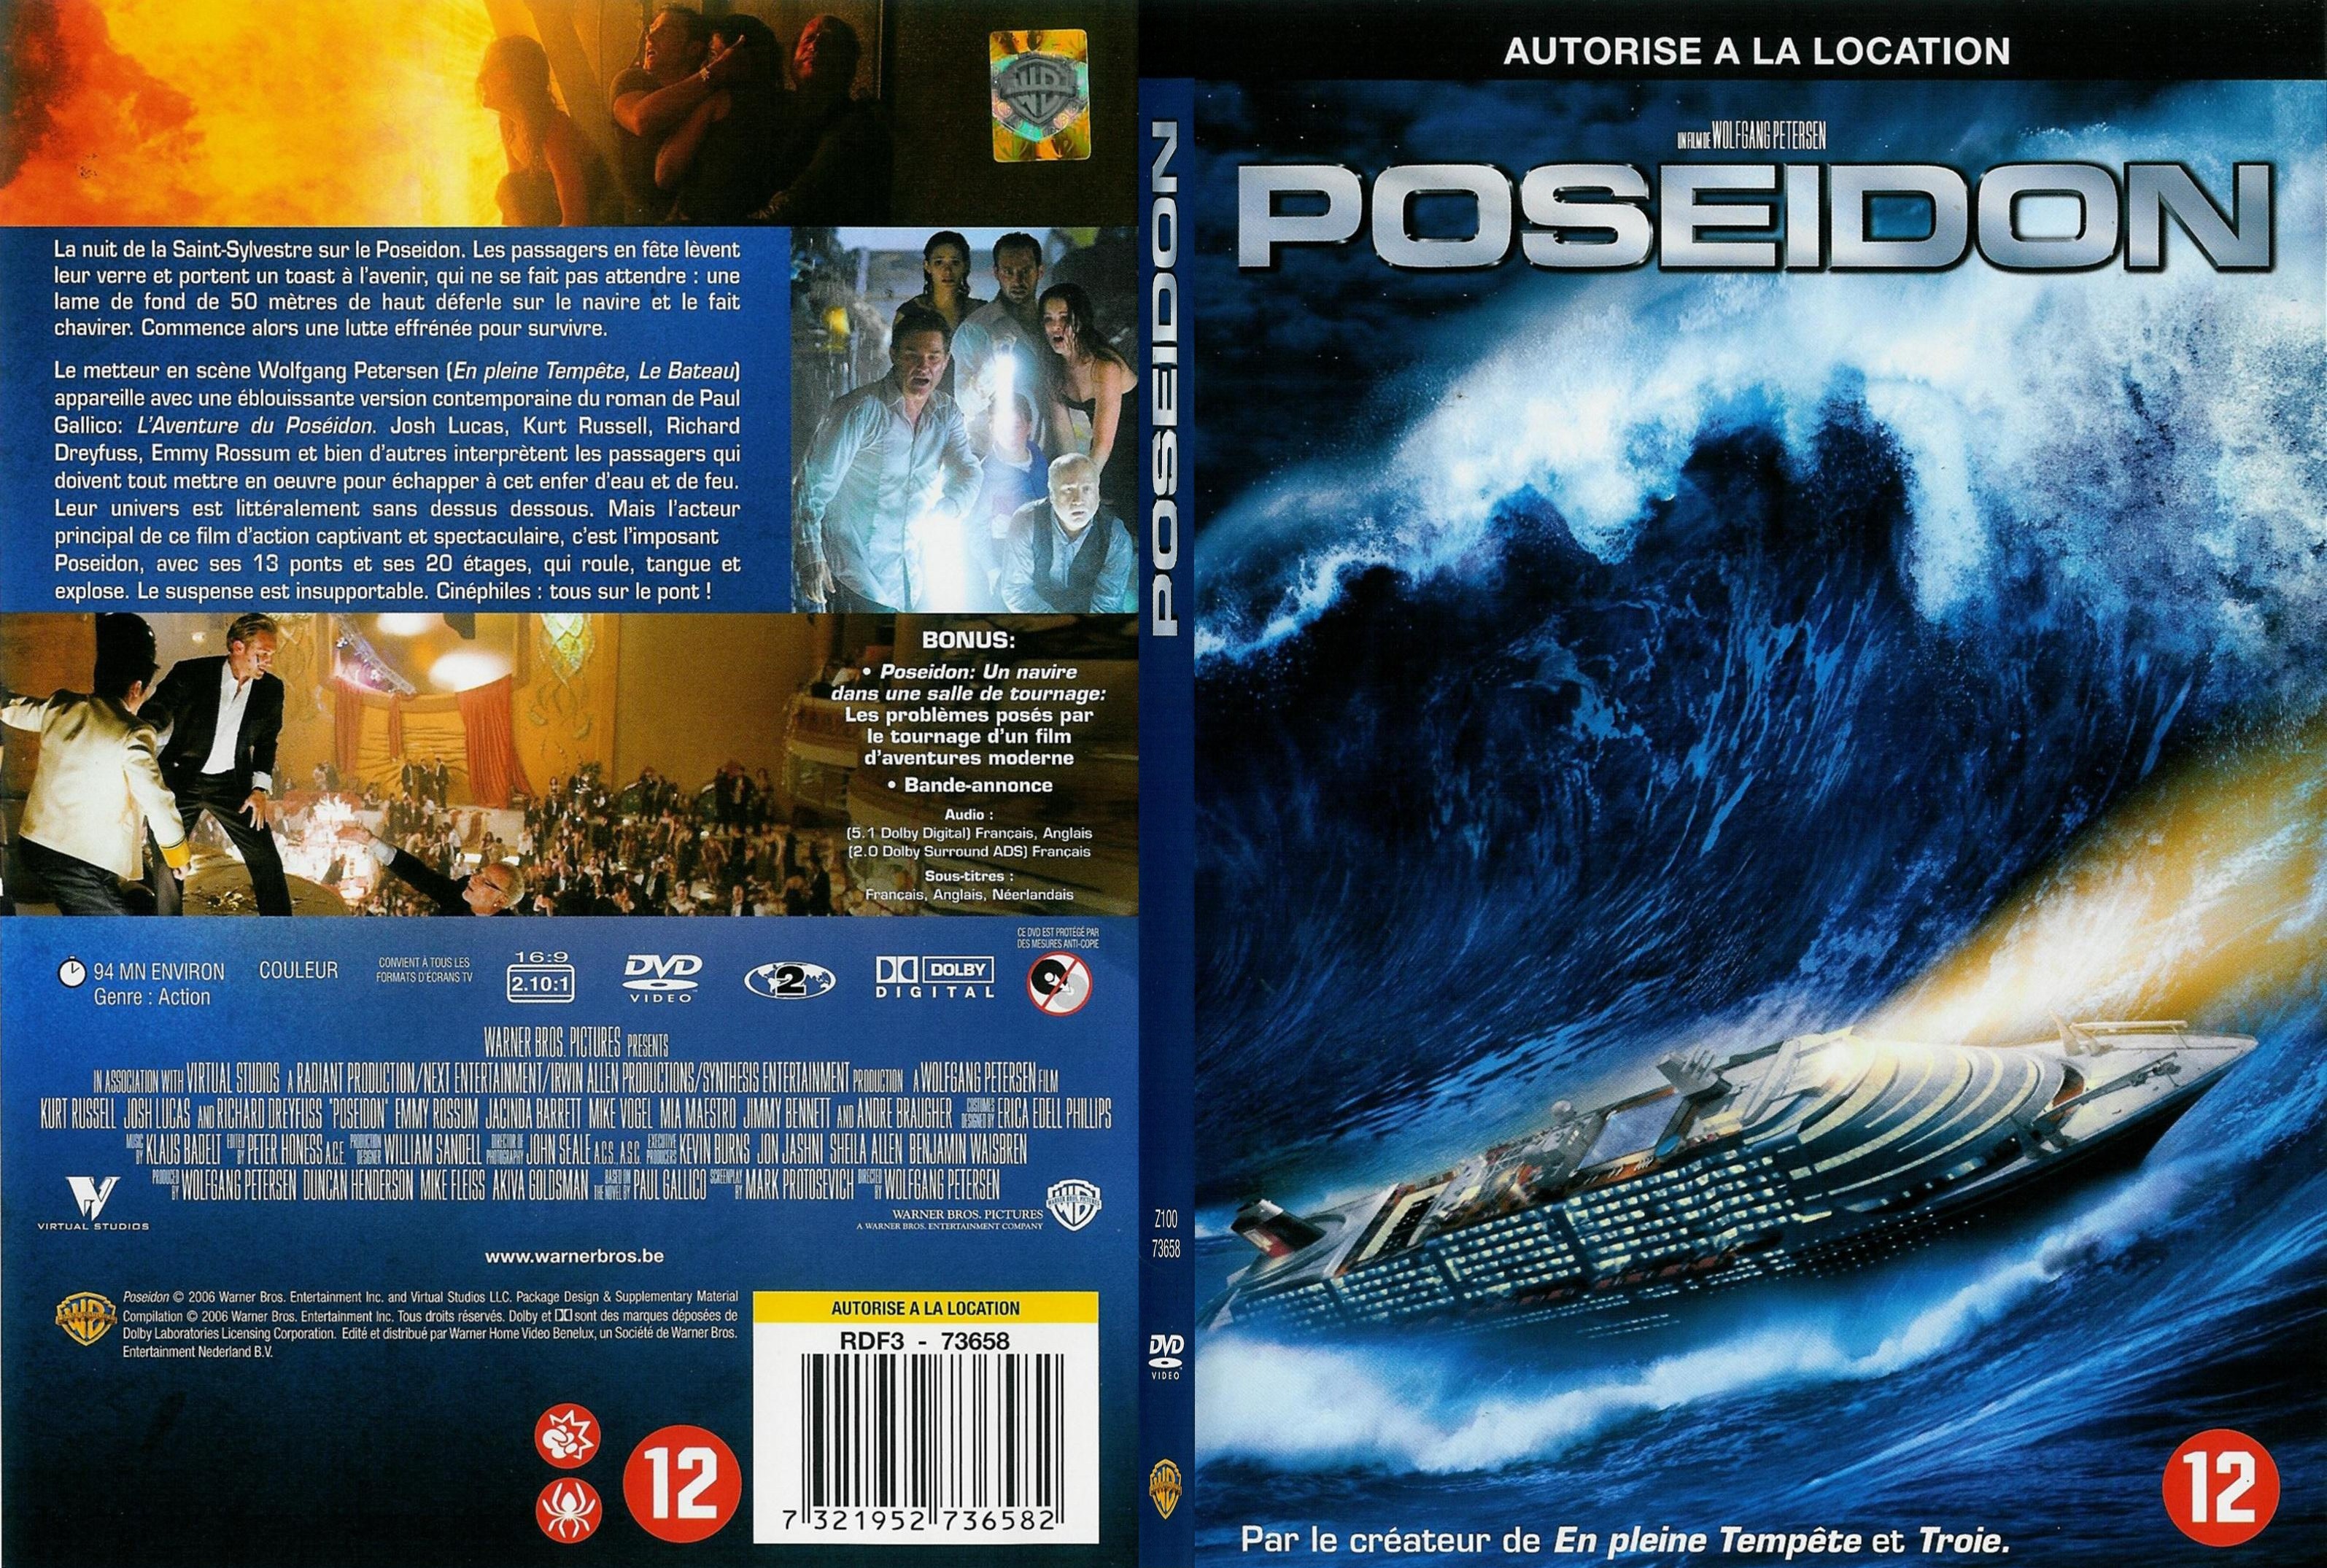 Jaquette DVD Poseidon - SLIM